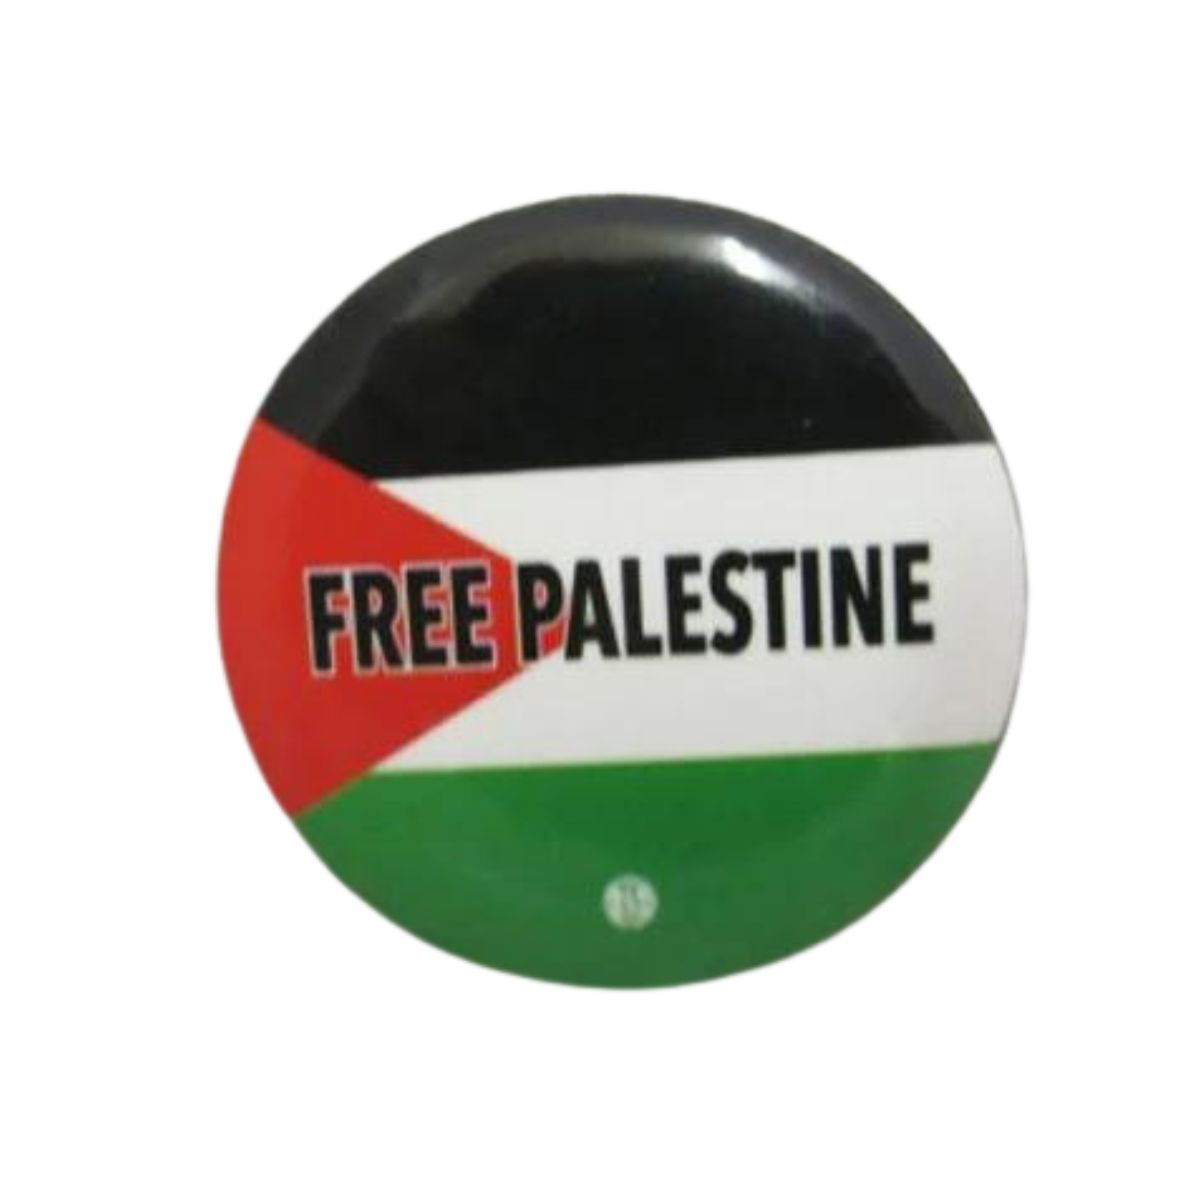 Handala - Free Palestine Symbol - Free Palestine - Pin